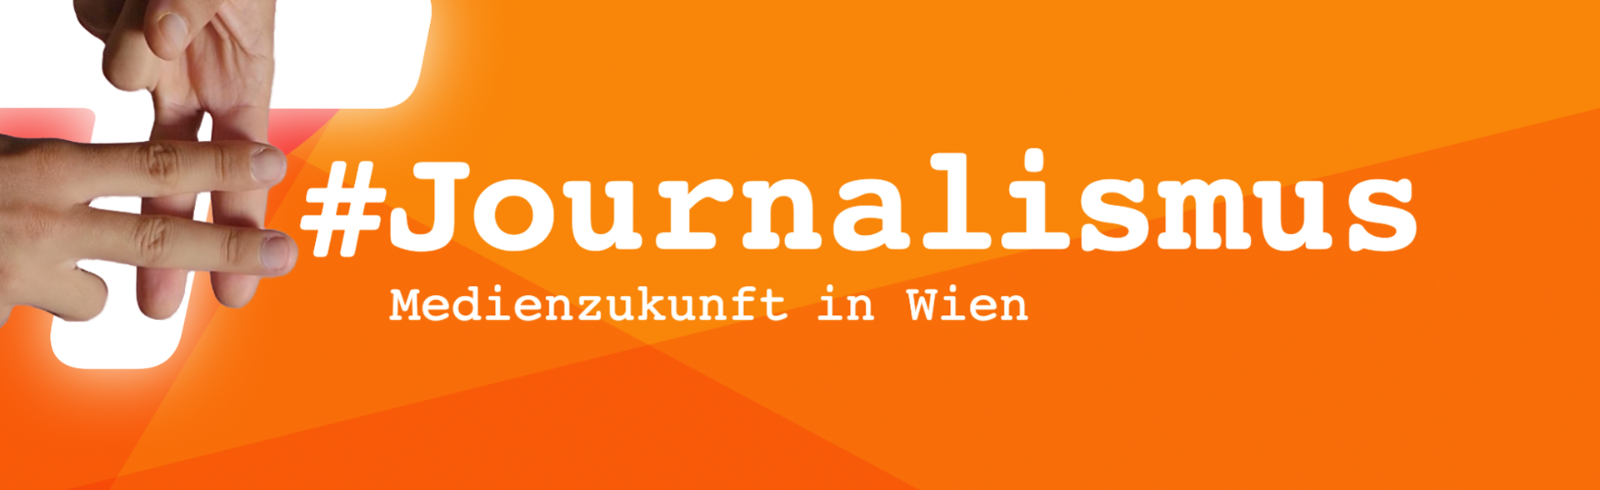 #Journalismus - Medienzukunft in Wien